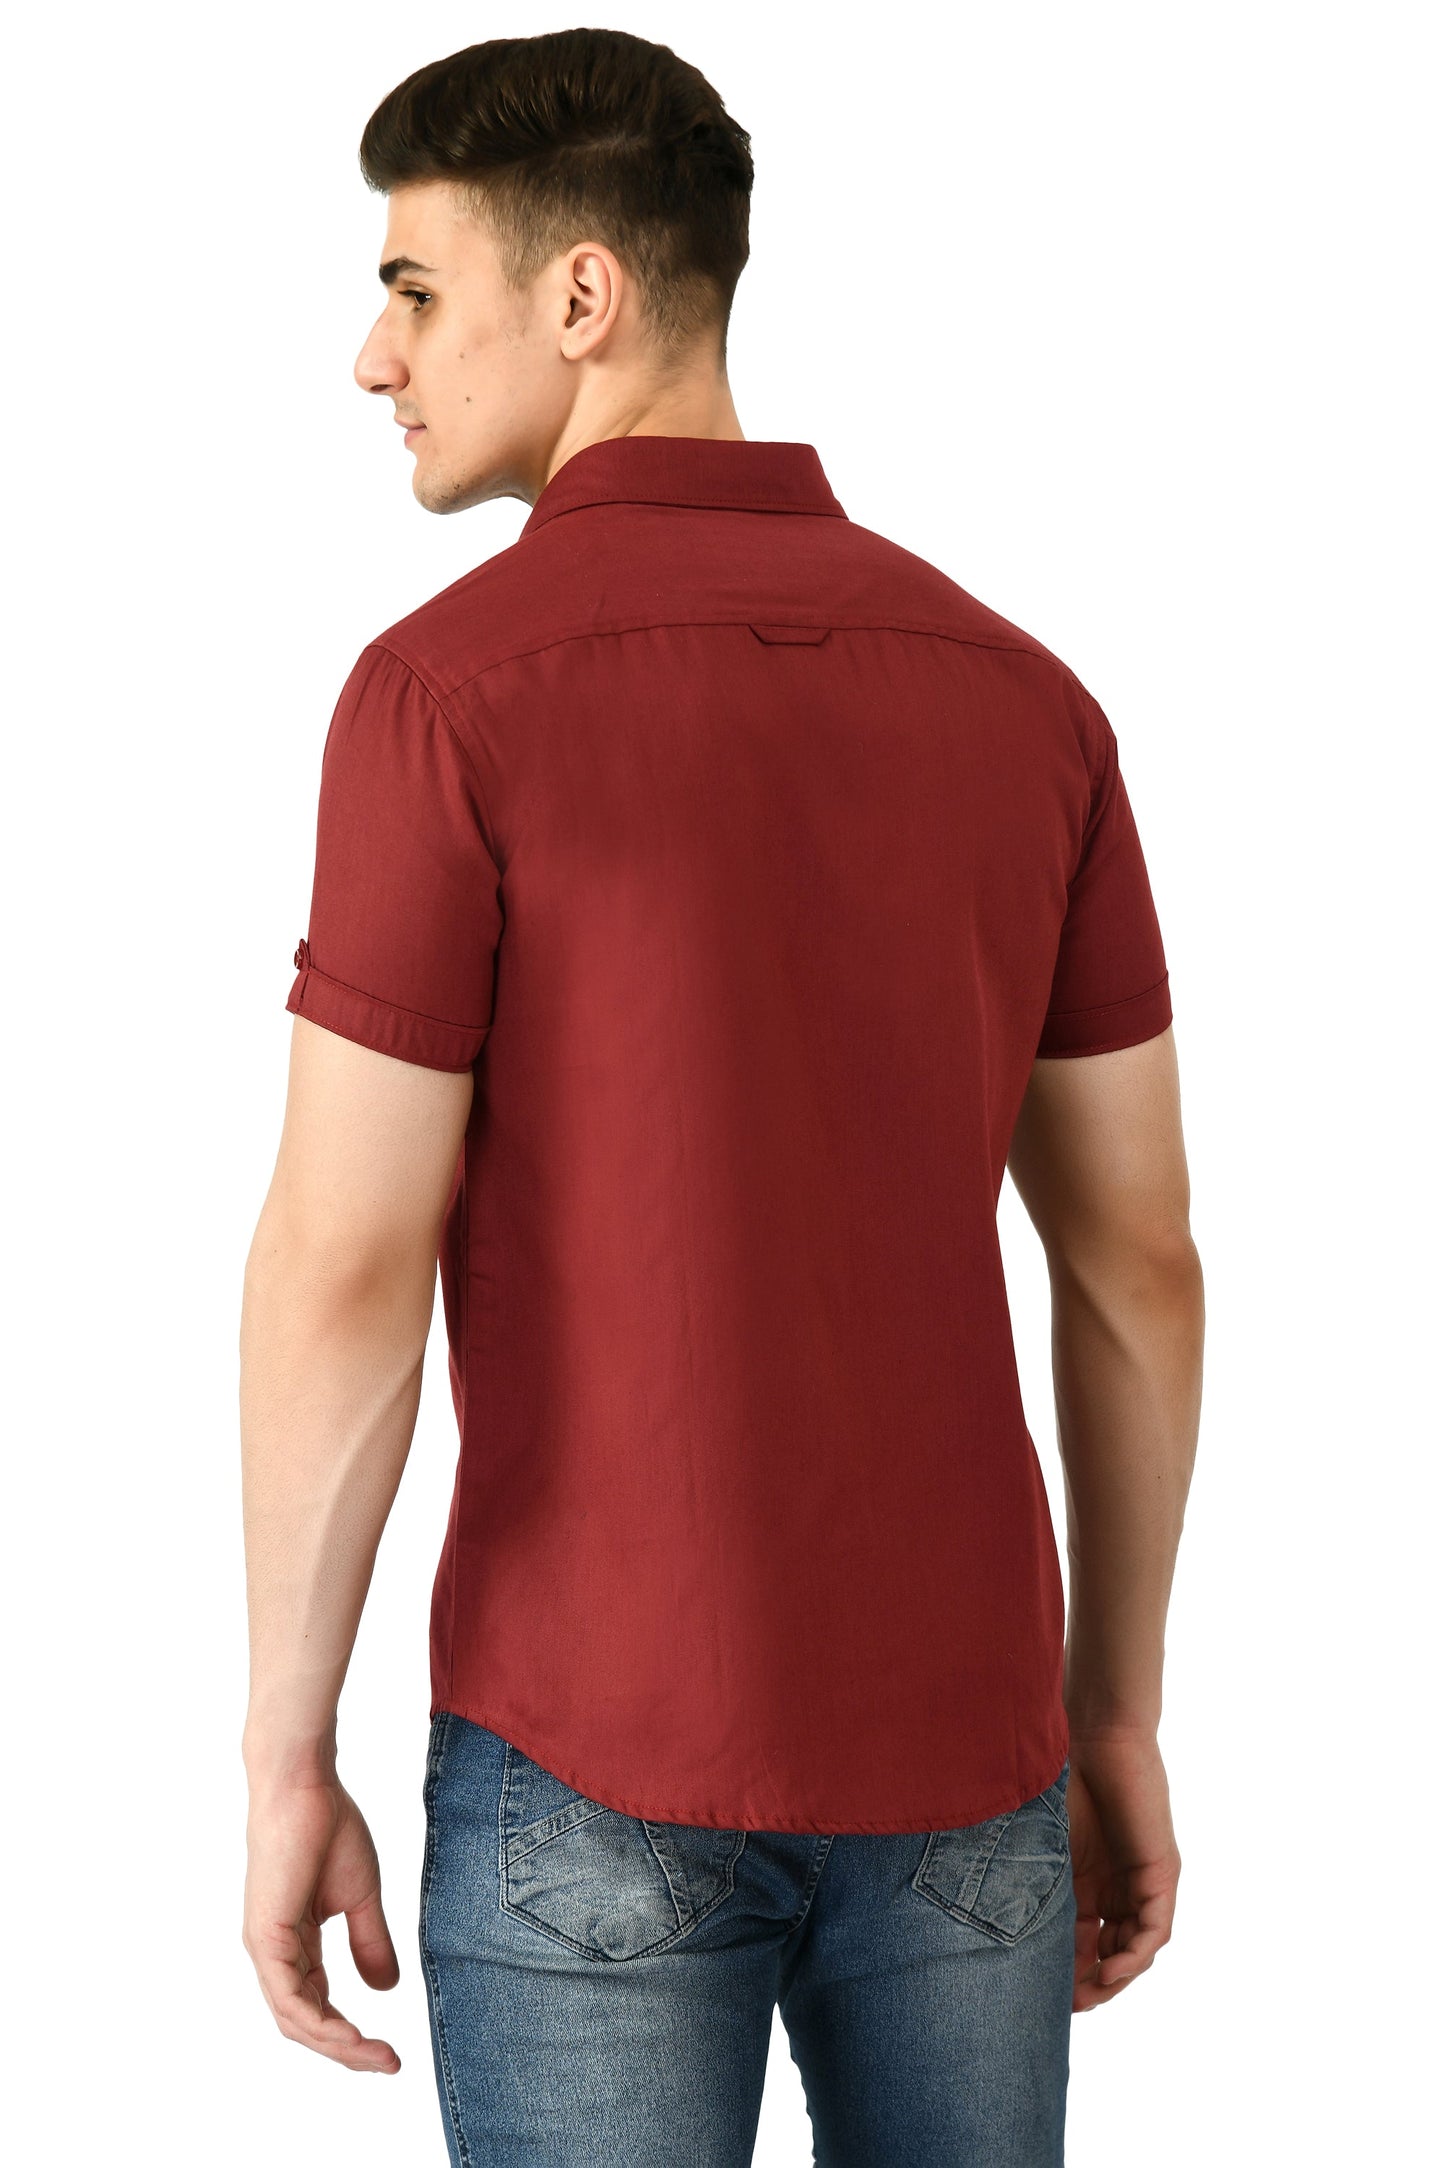 Short Sleeve Cotton Spread Collar Men's Shirt - Rust Red